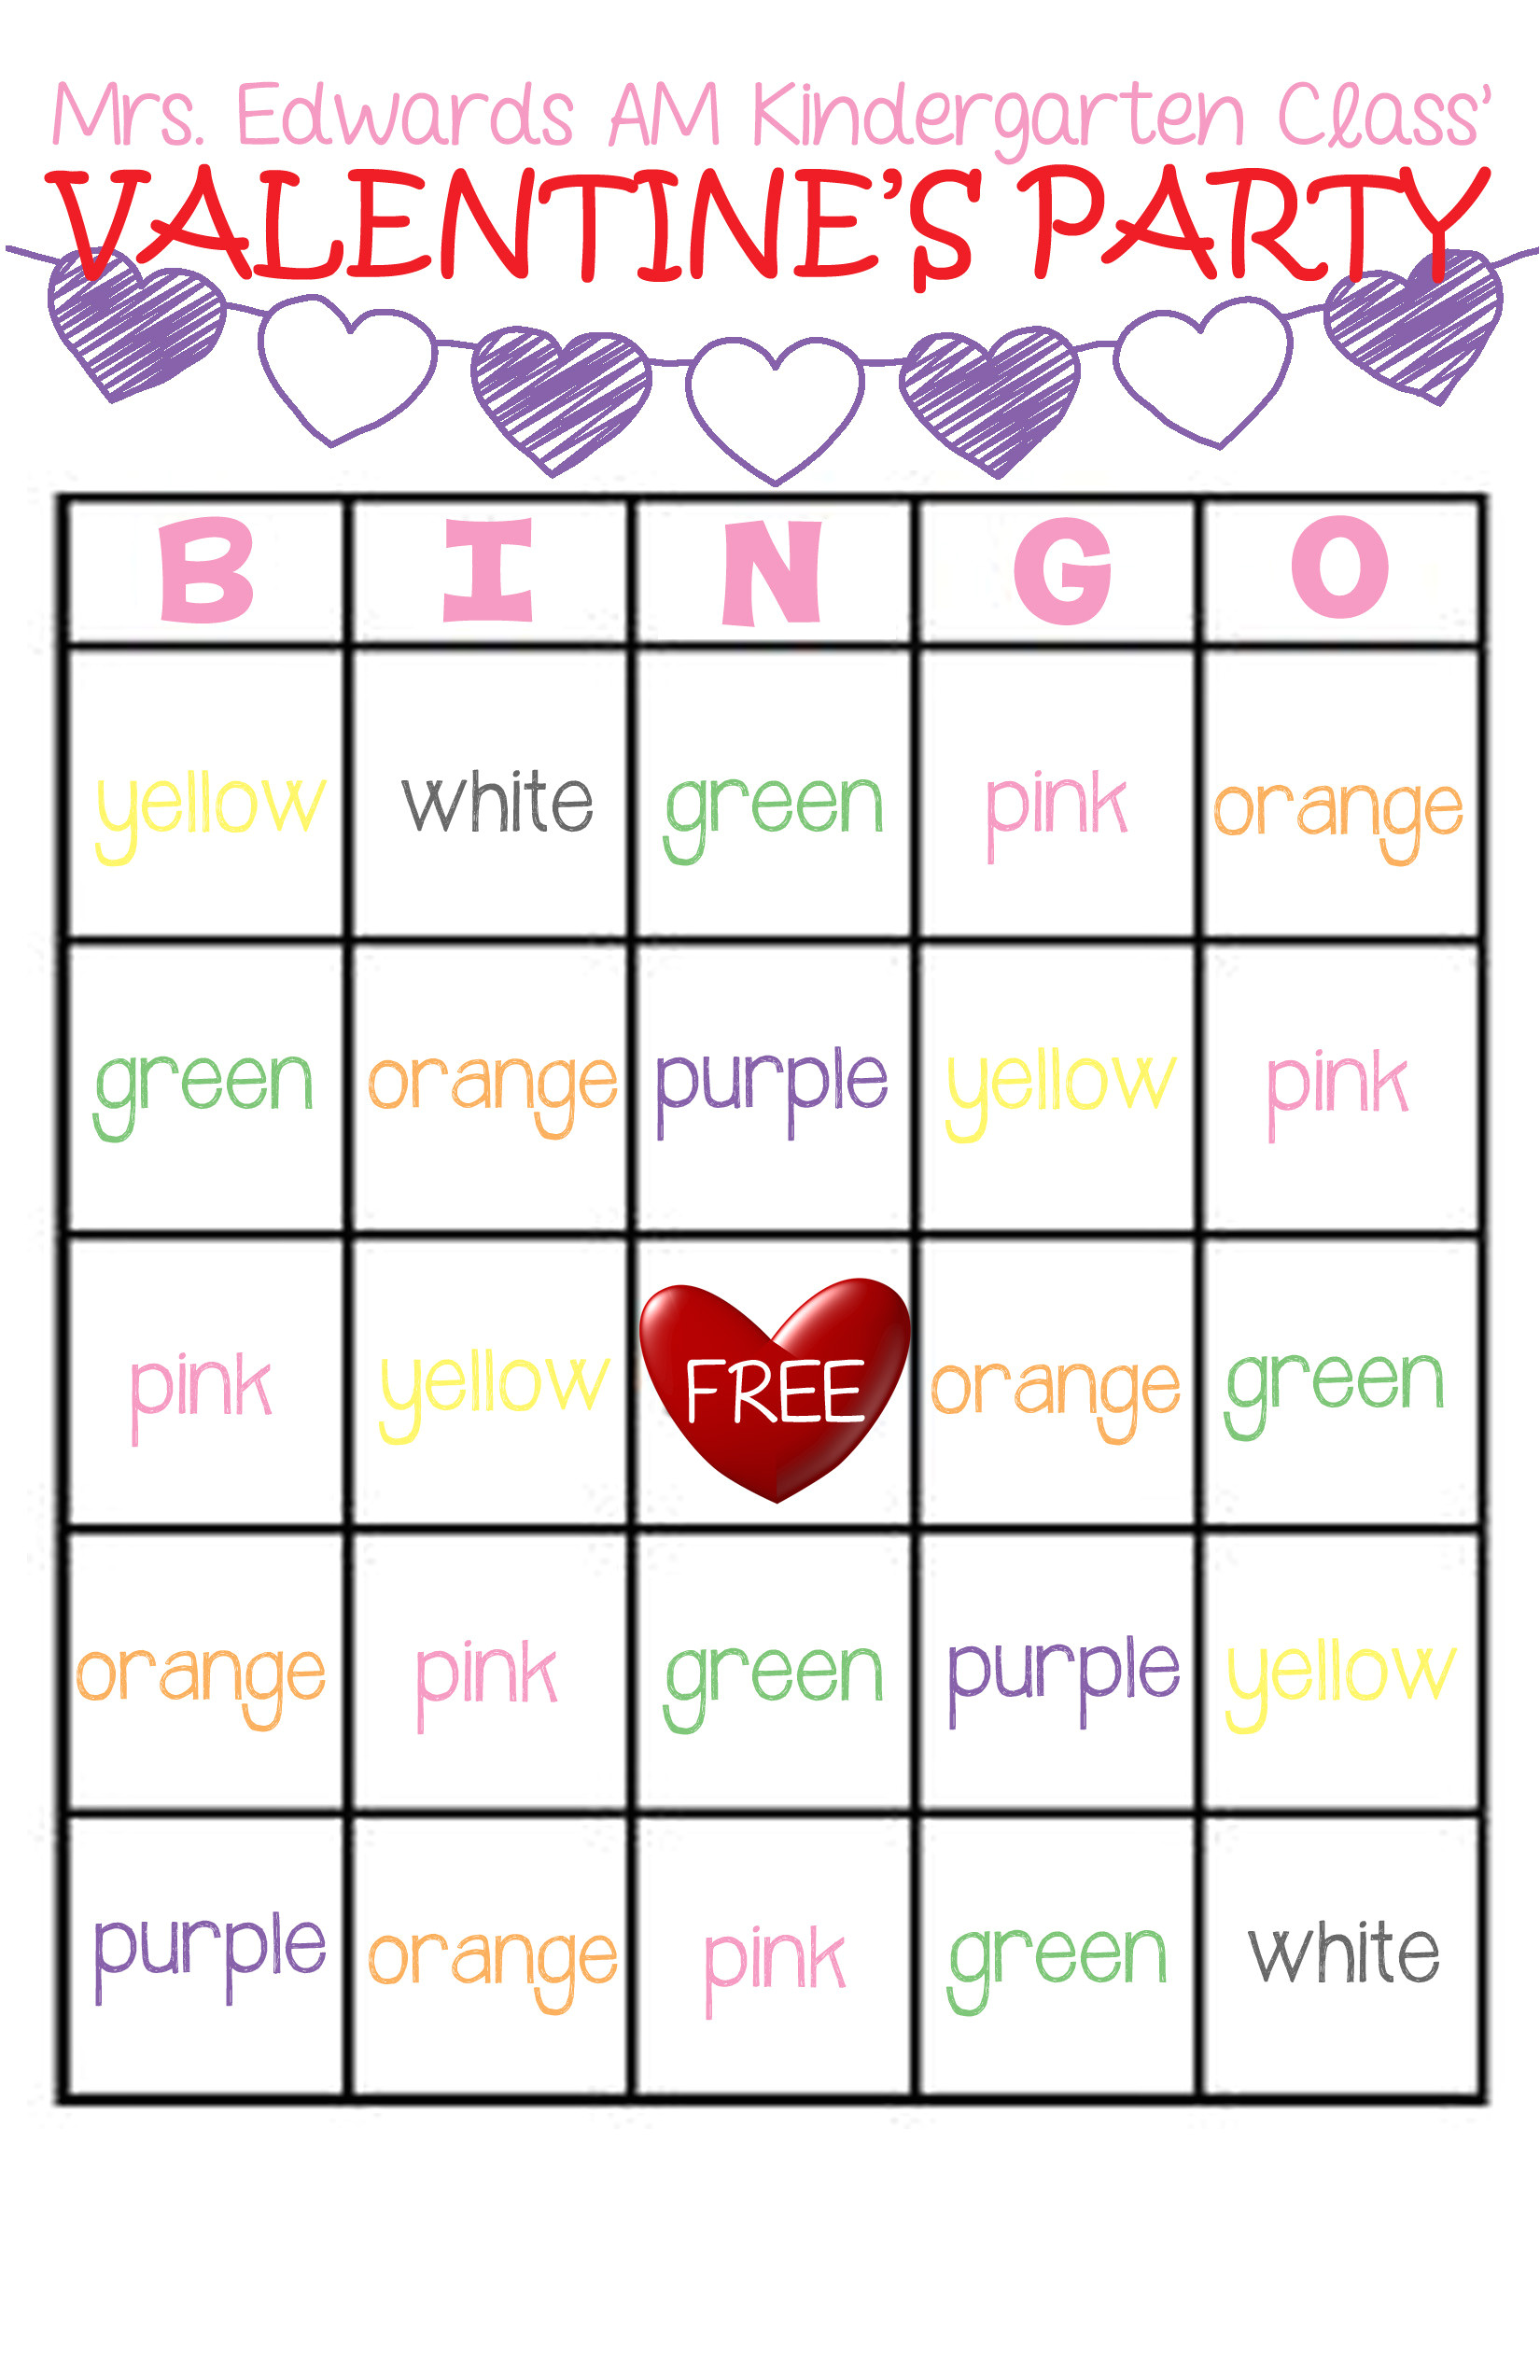 classroom valentines party bingo game free printable